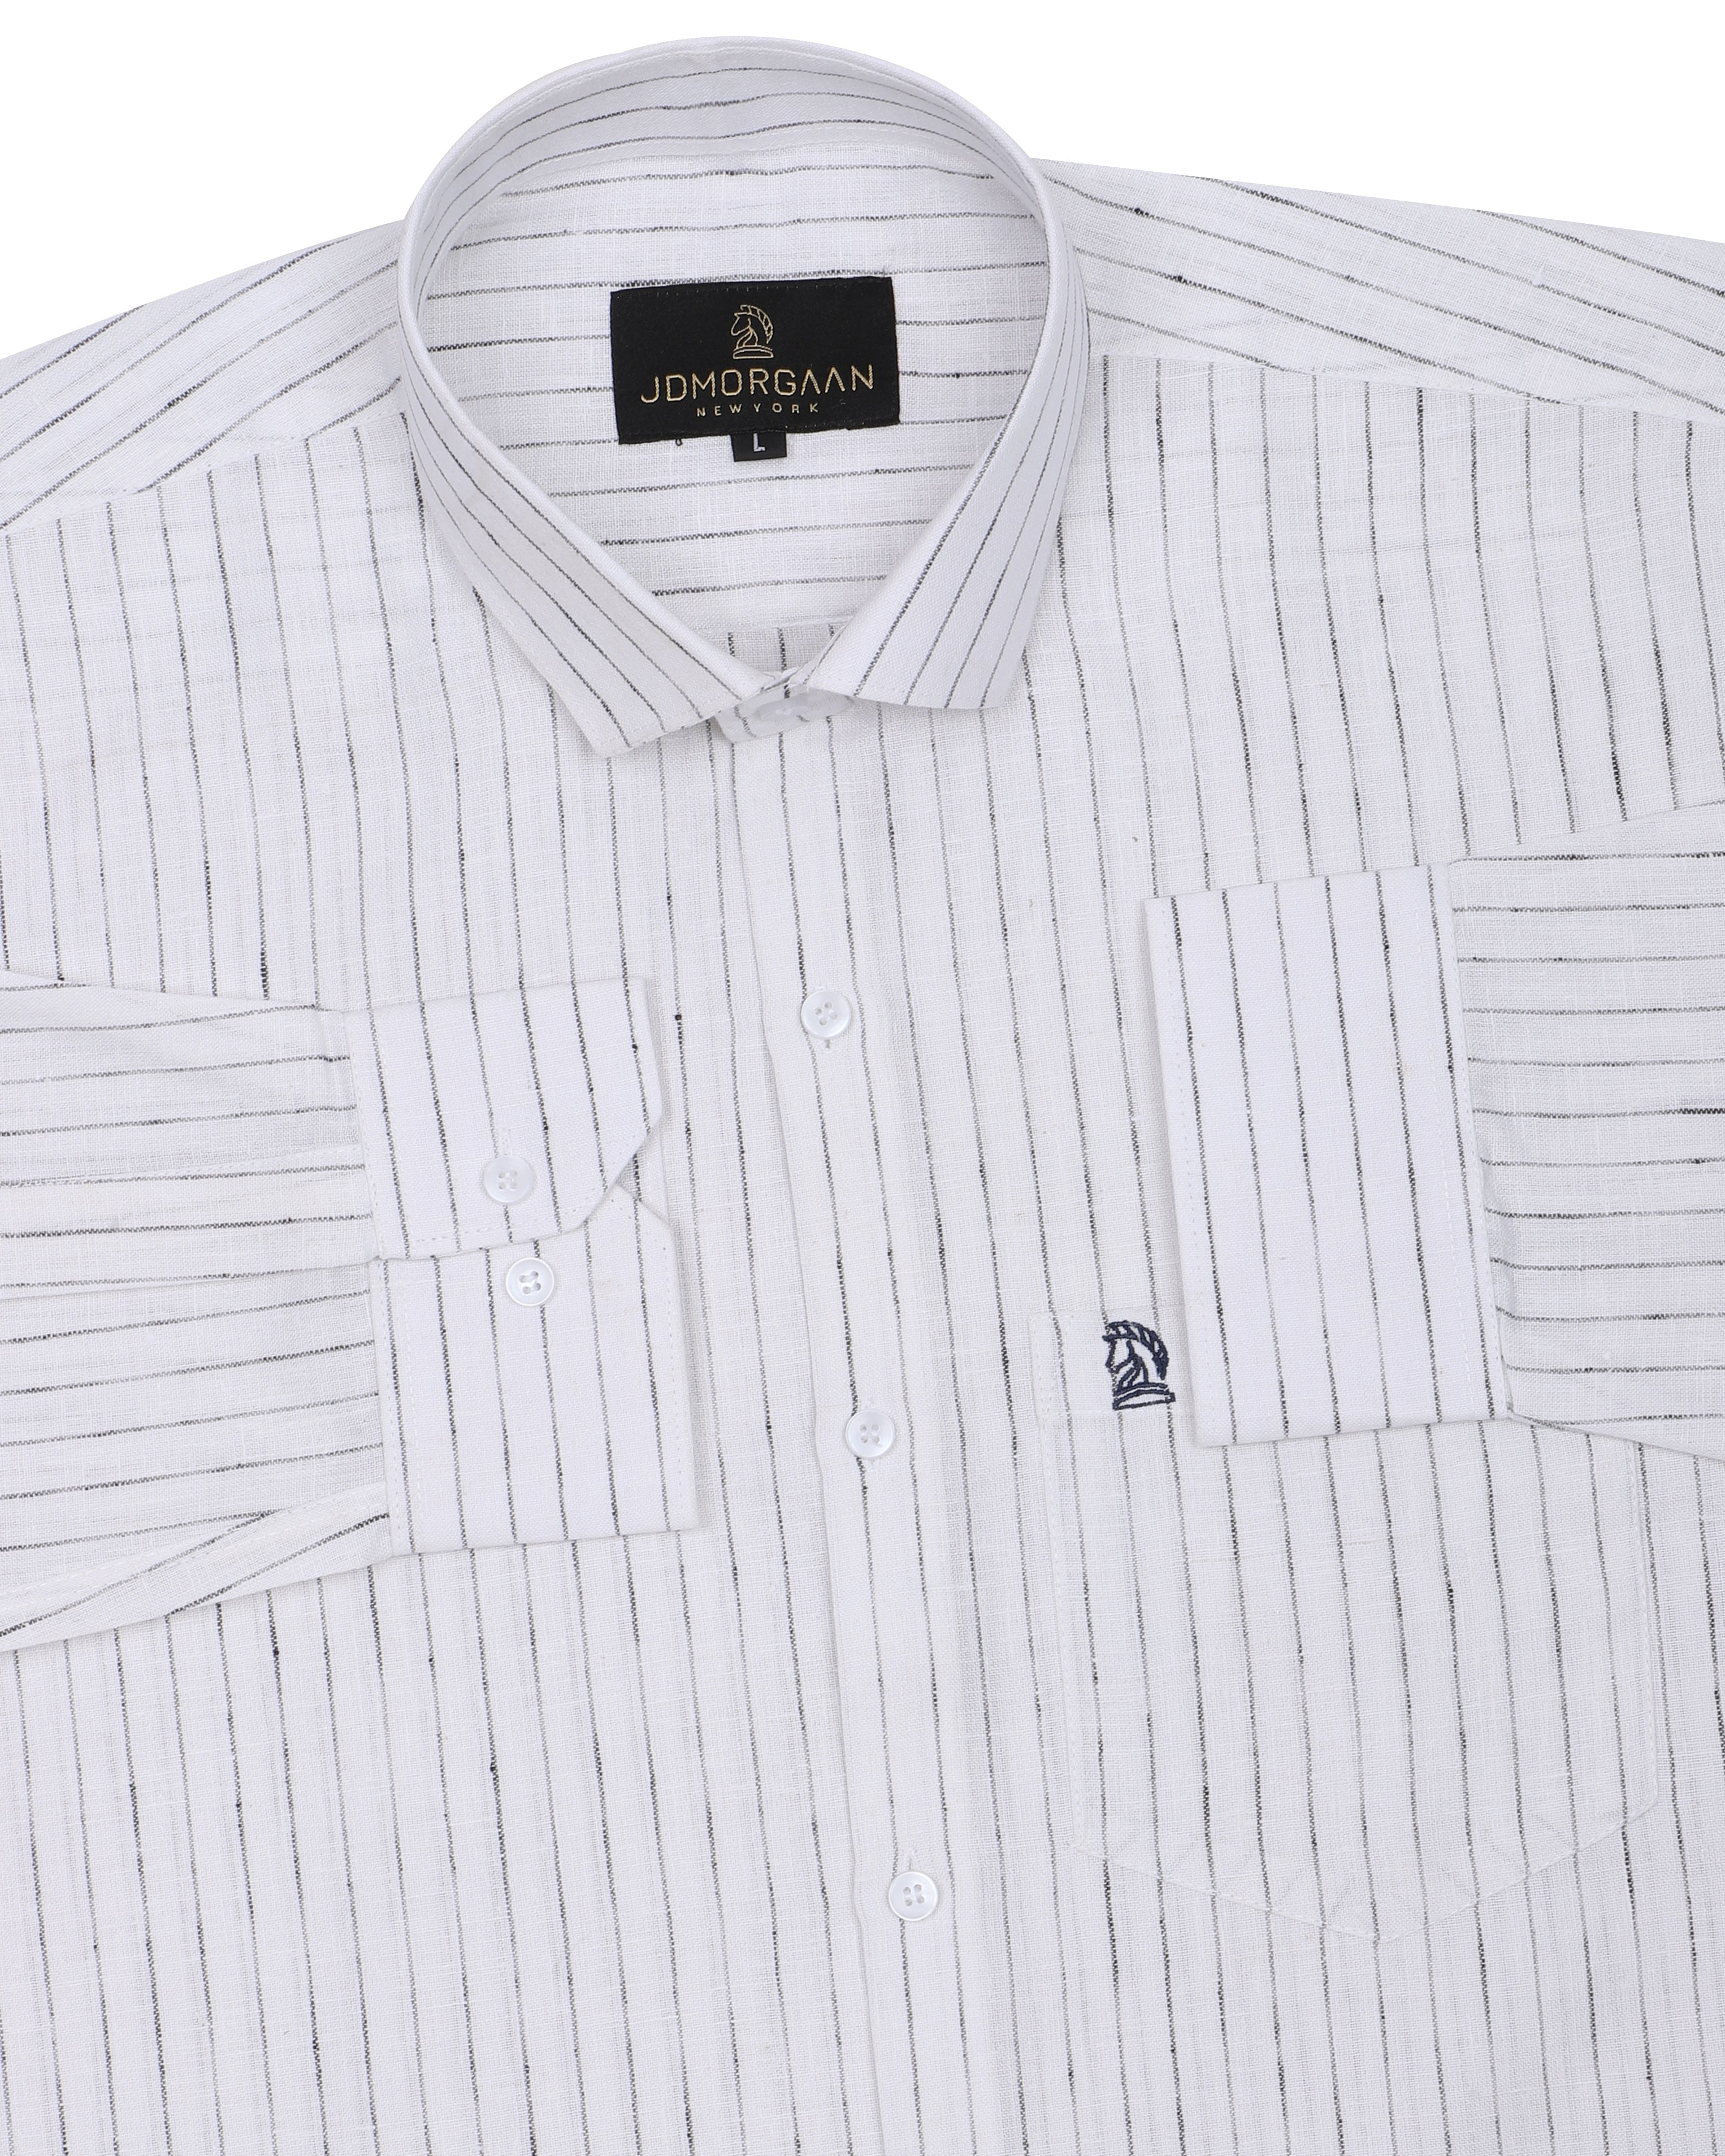 White Lining Premium Cotton Shirt